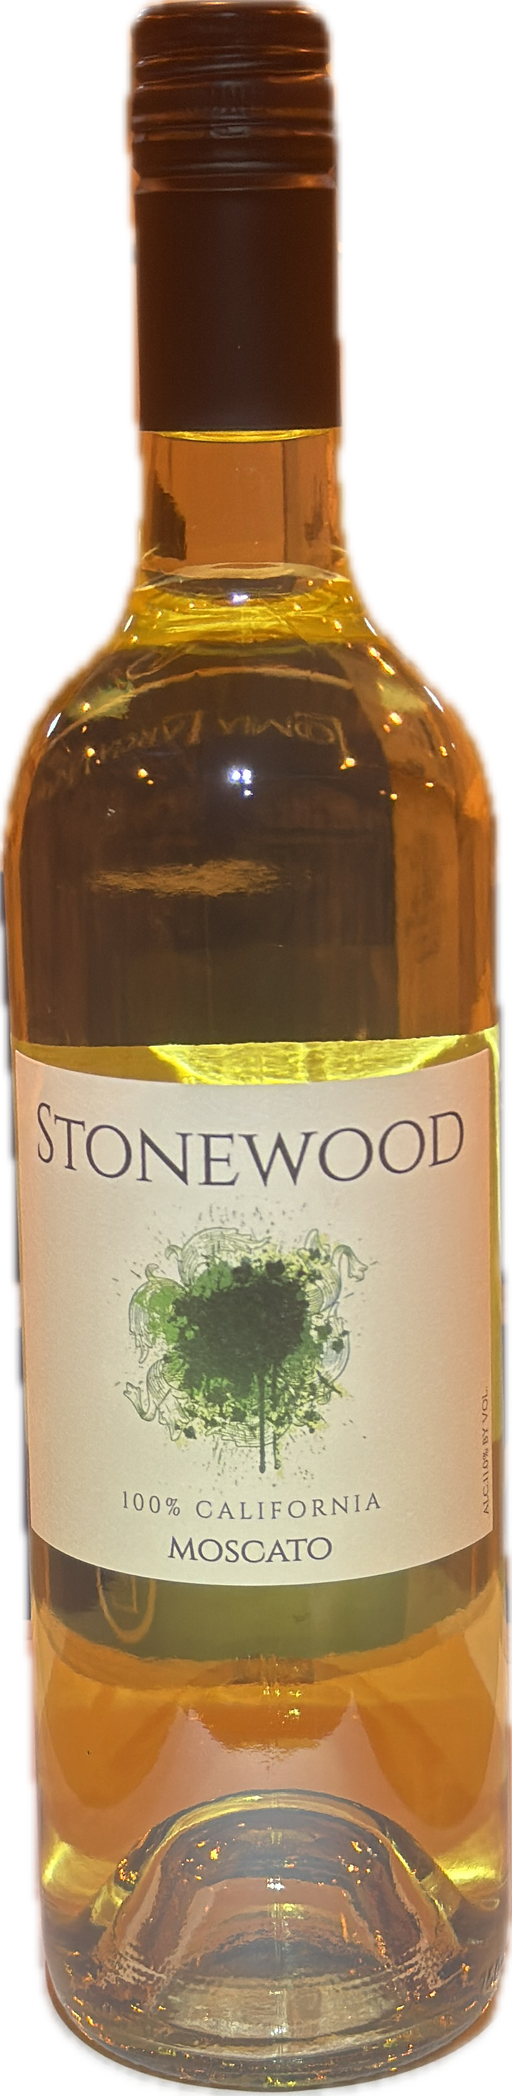 Stonewood Moscato 20NV - VineChain